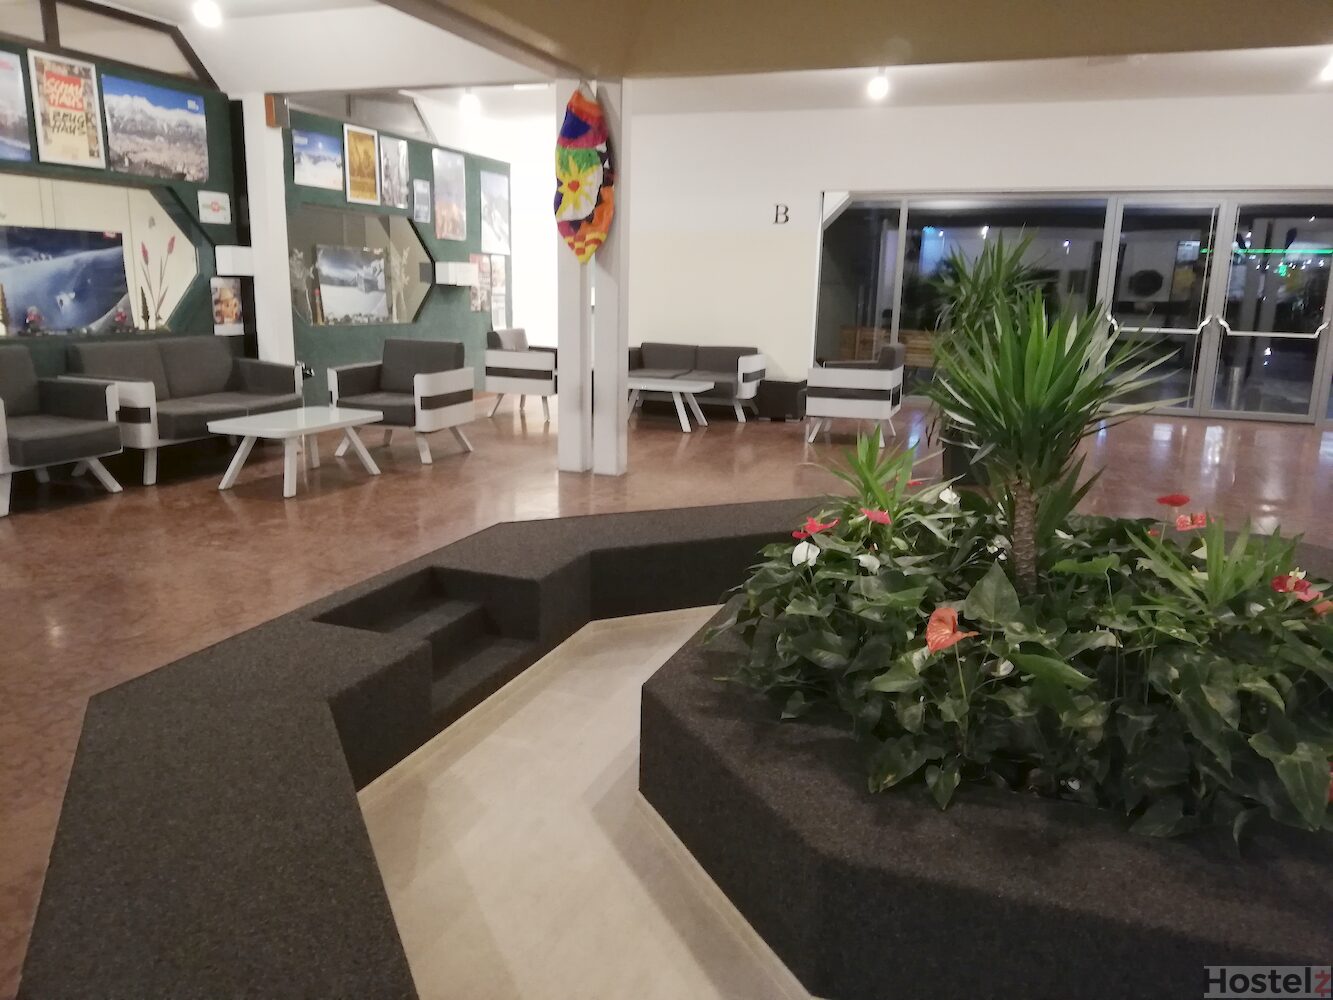 Reception and lobby area